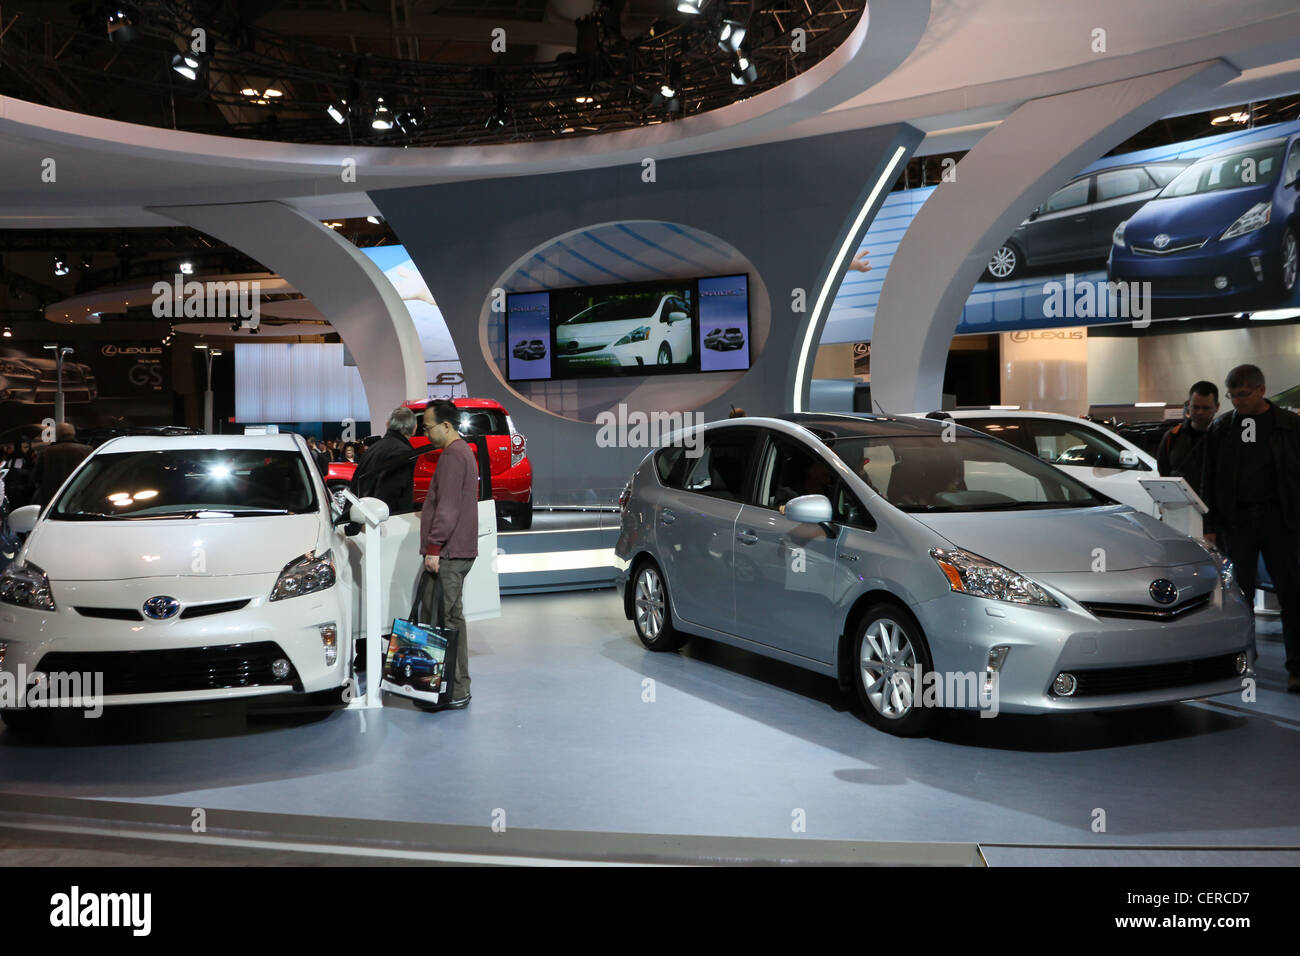 toyota prius electric hybrid car cars showroom Stock Photo